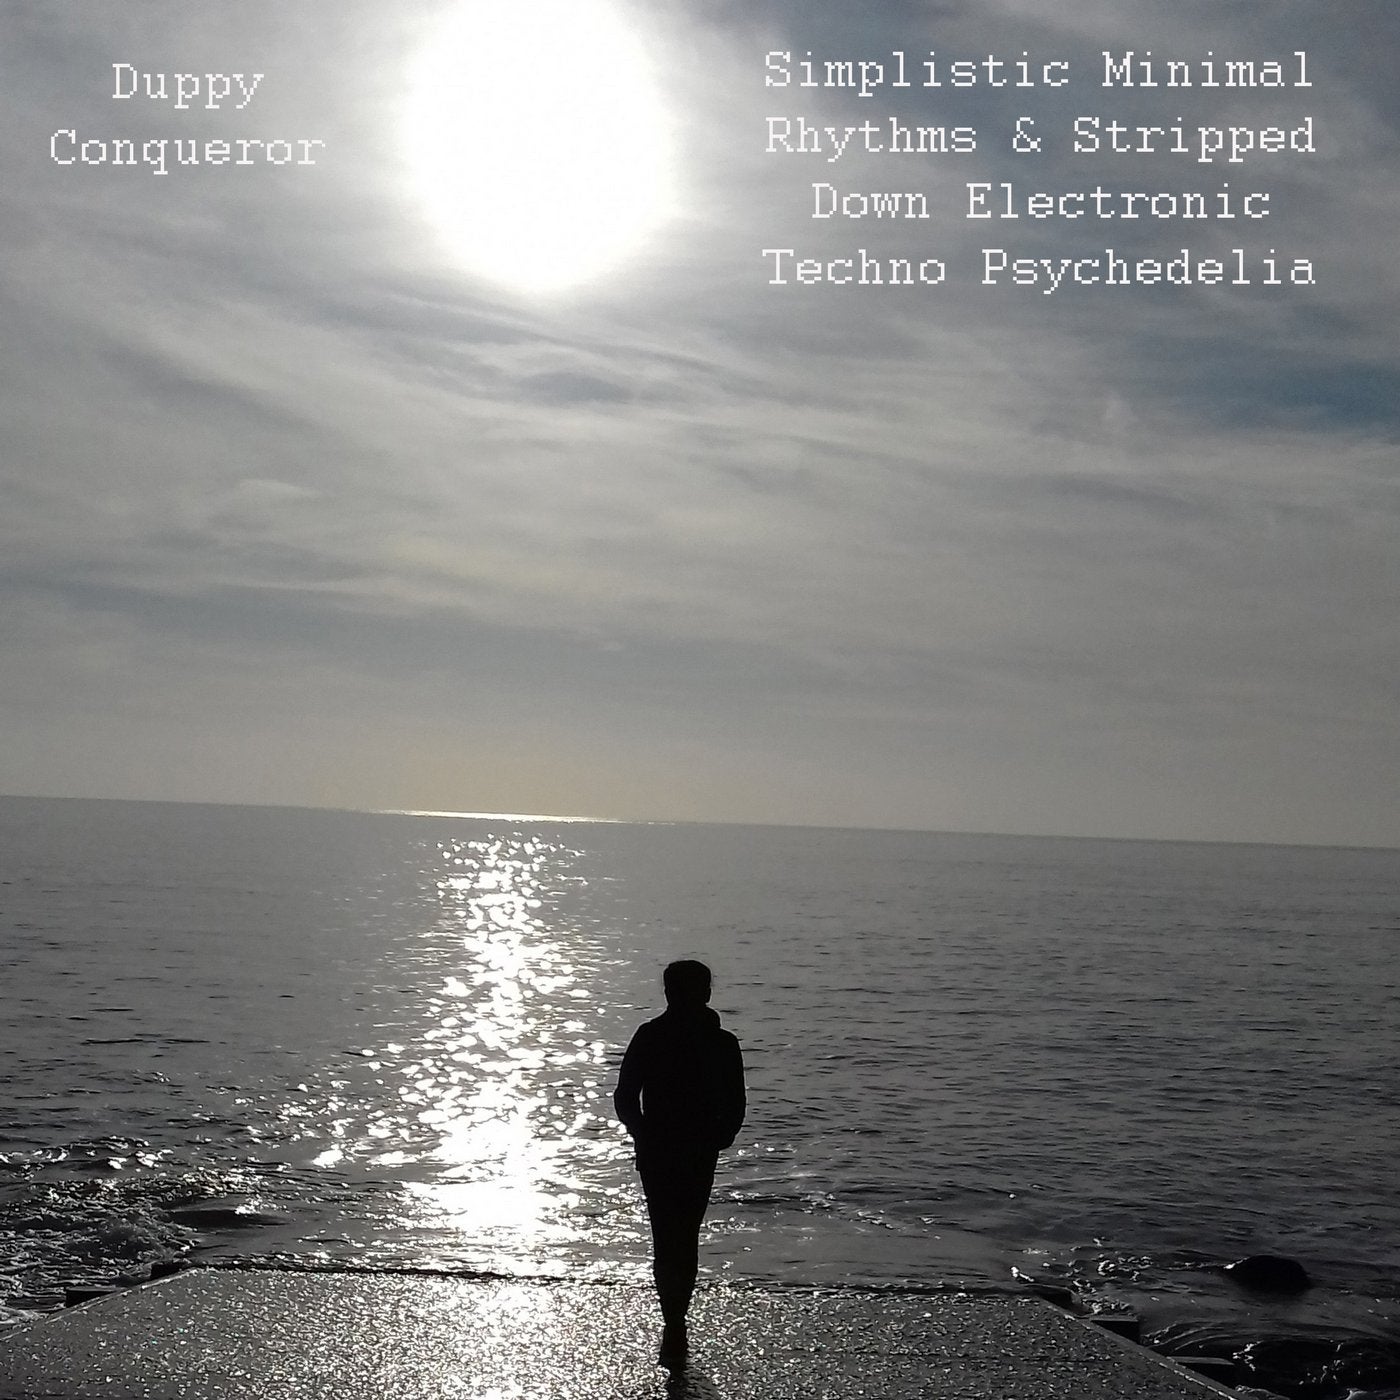 Simplistic Minimal Rhythms & Stripped Down Electronic Techno Psychedelia